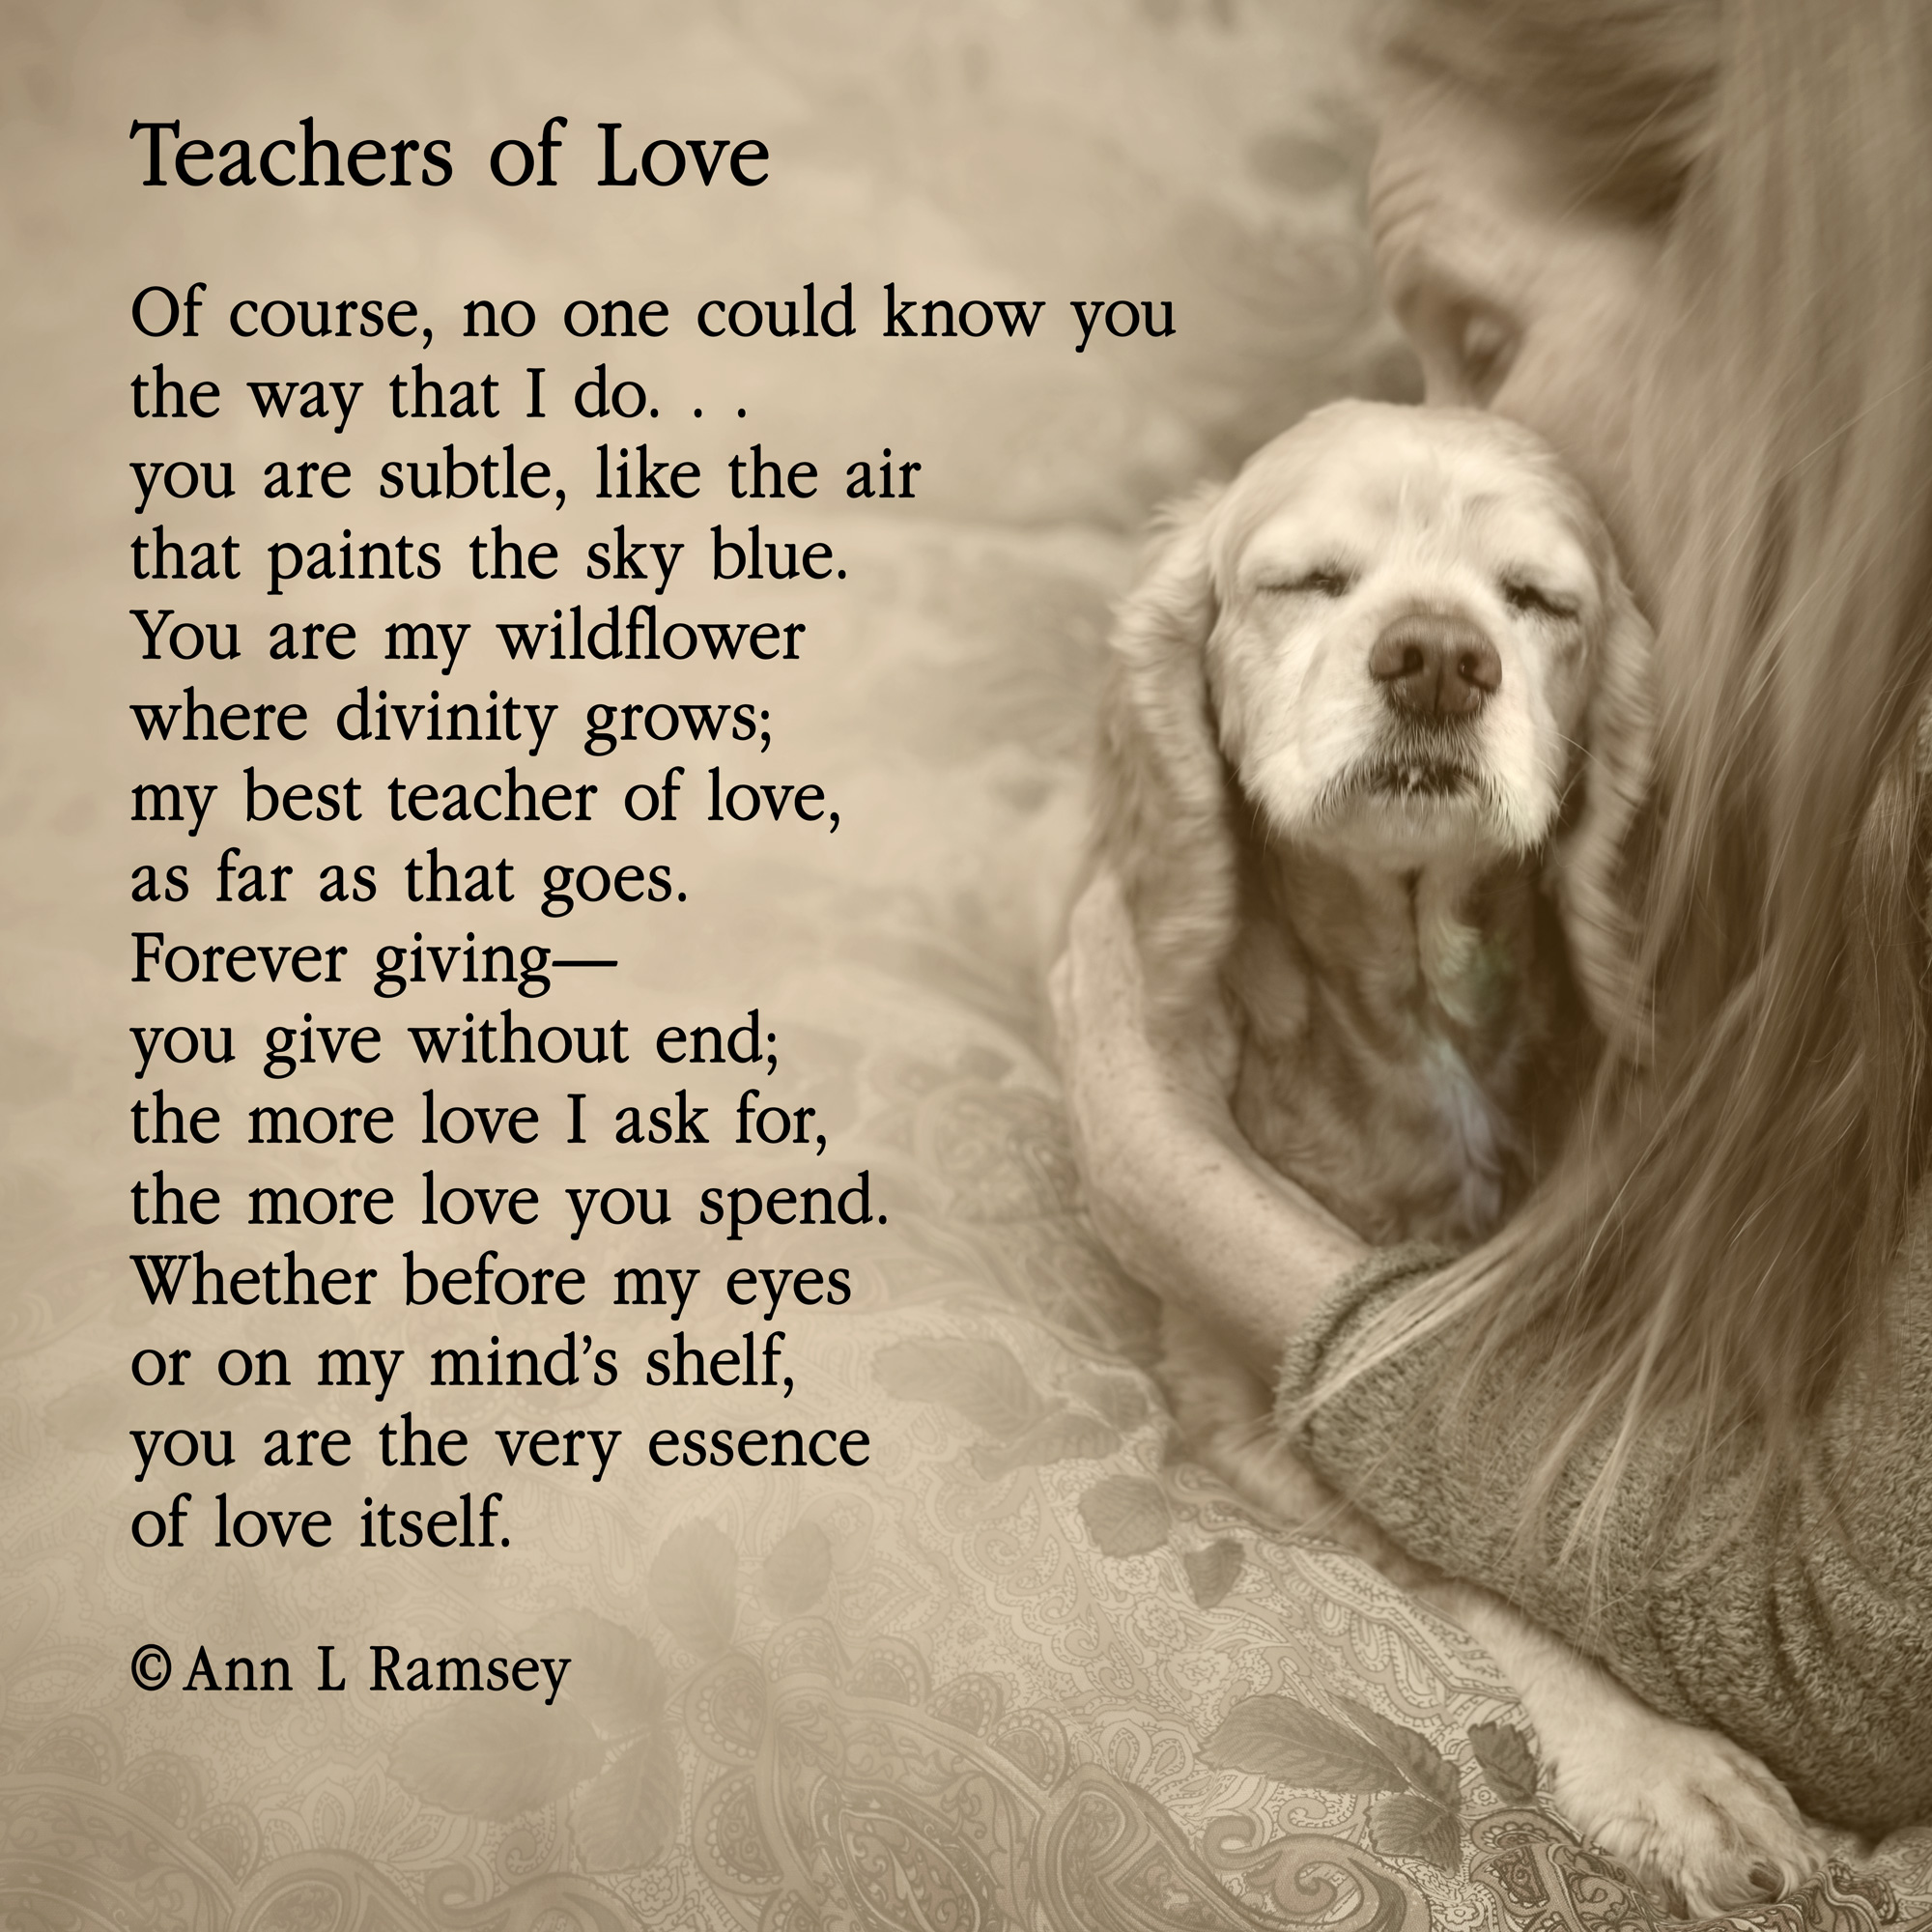 Teachers of Love